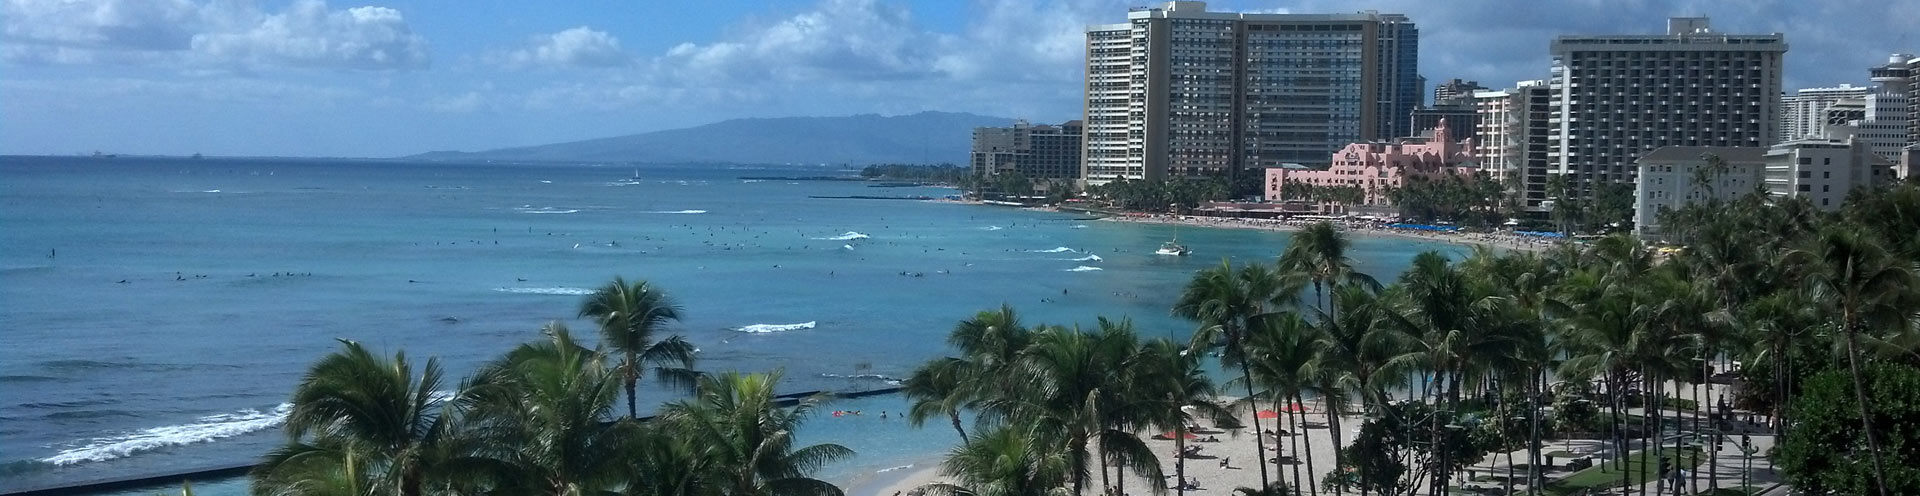 Waikiki shoreline with hotels and beach